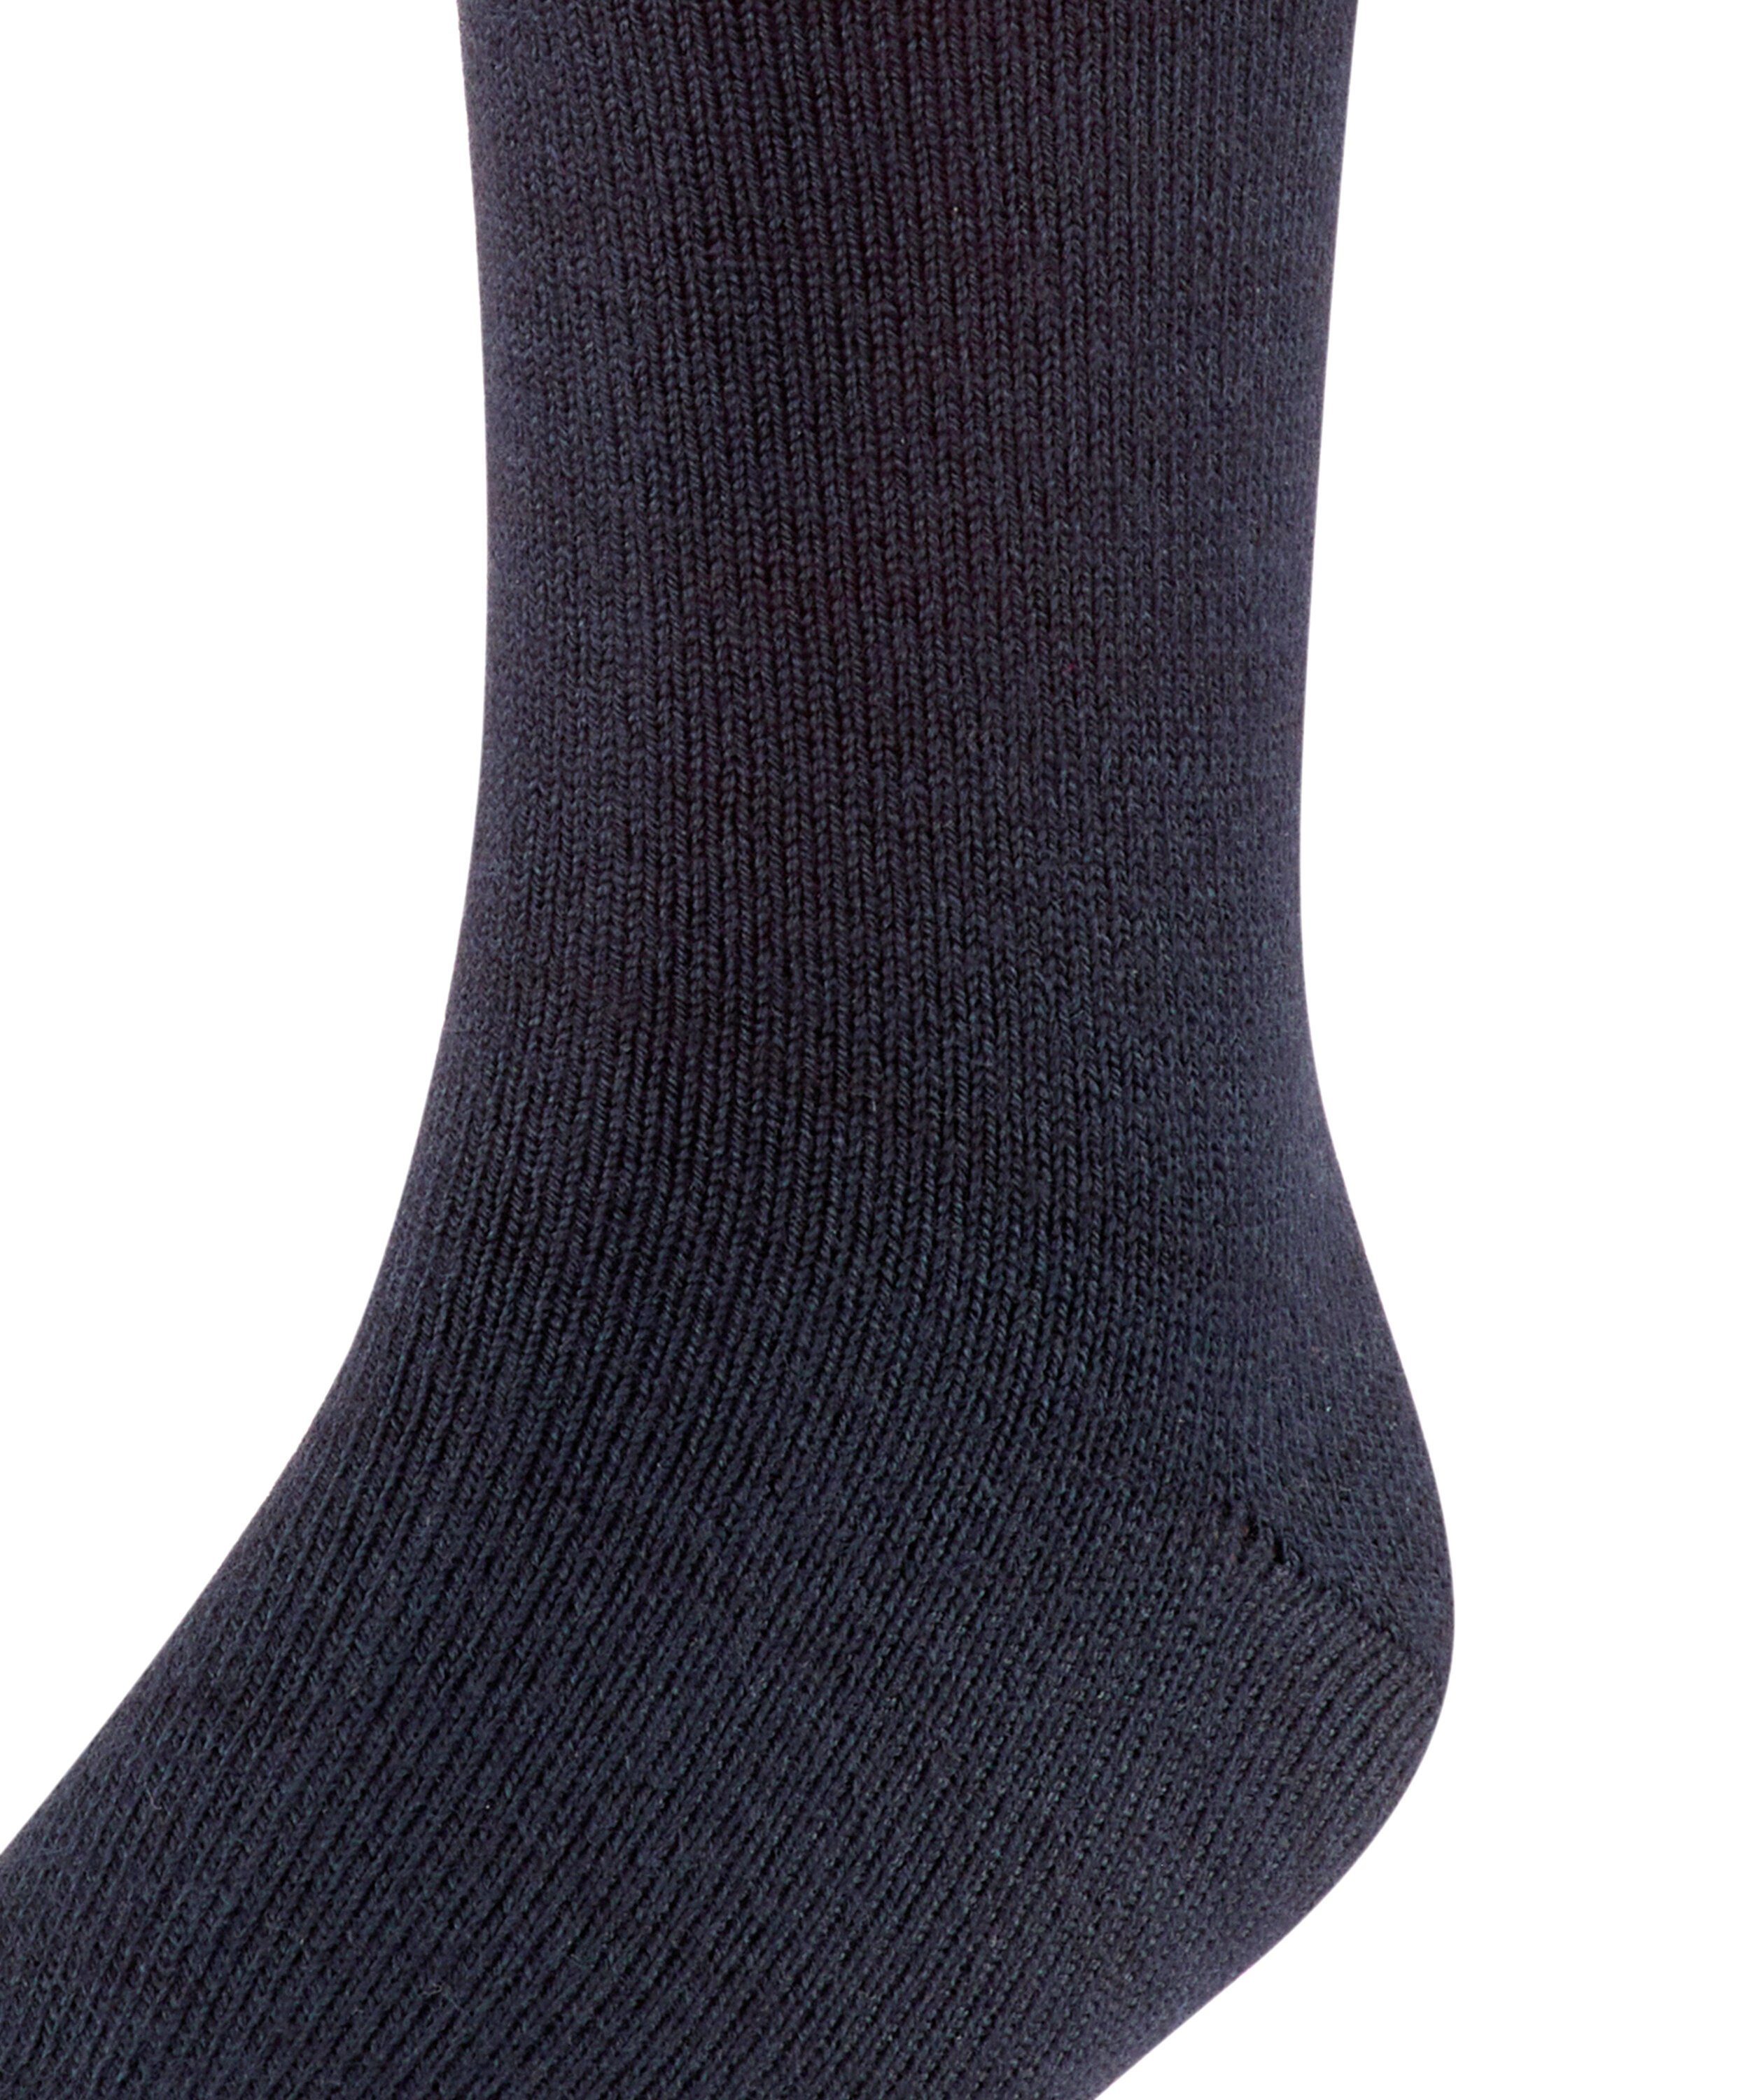 FALKE Socken Comfort Wool (6170) darkmarine (1-Paar)